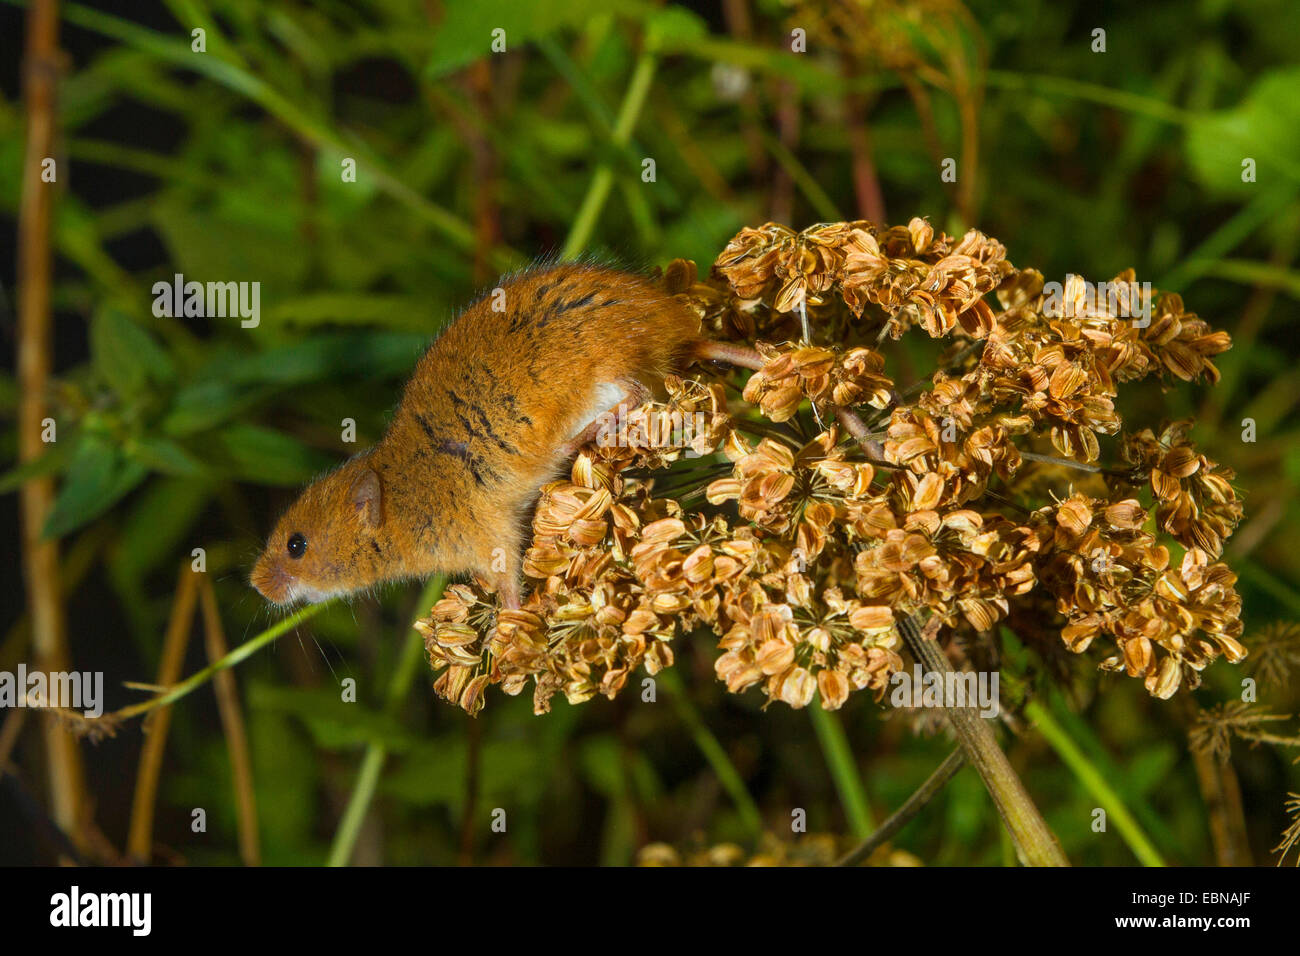 Cosecha del viejo mundo ratón (Micromys minutus), en umbela de fruta de angélica Foto de stock